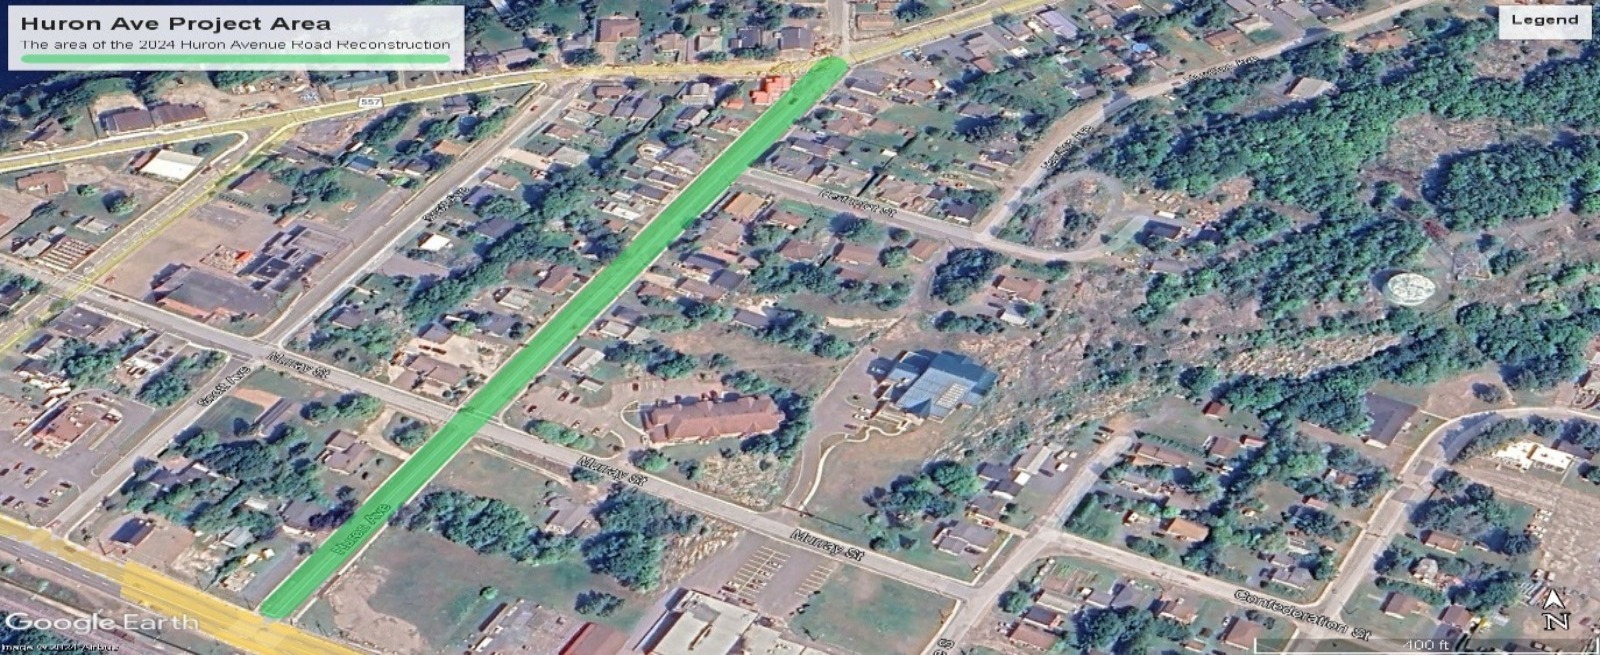 Huron avenue project map